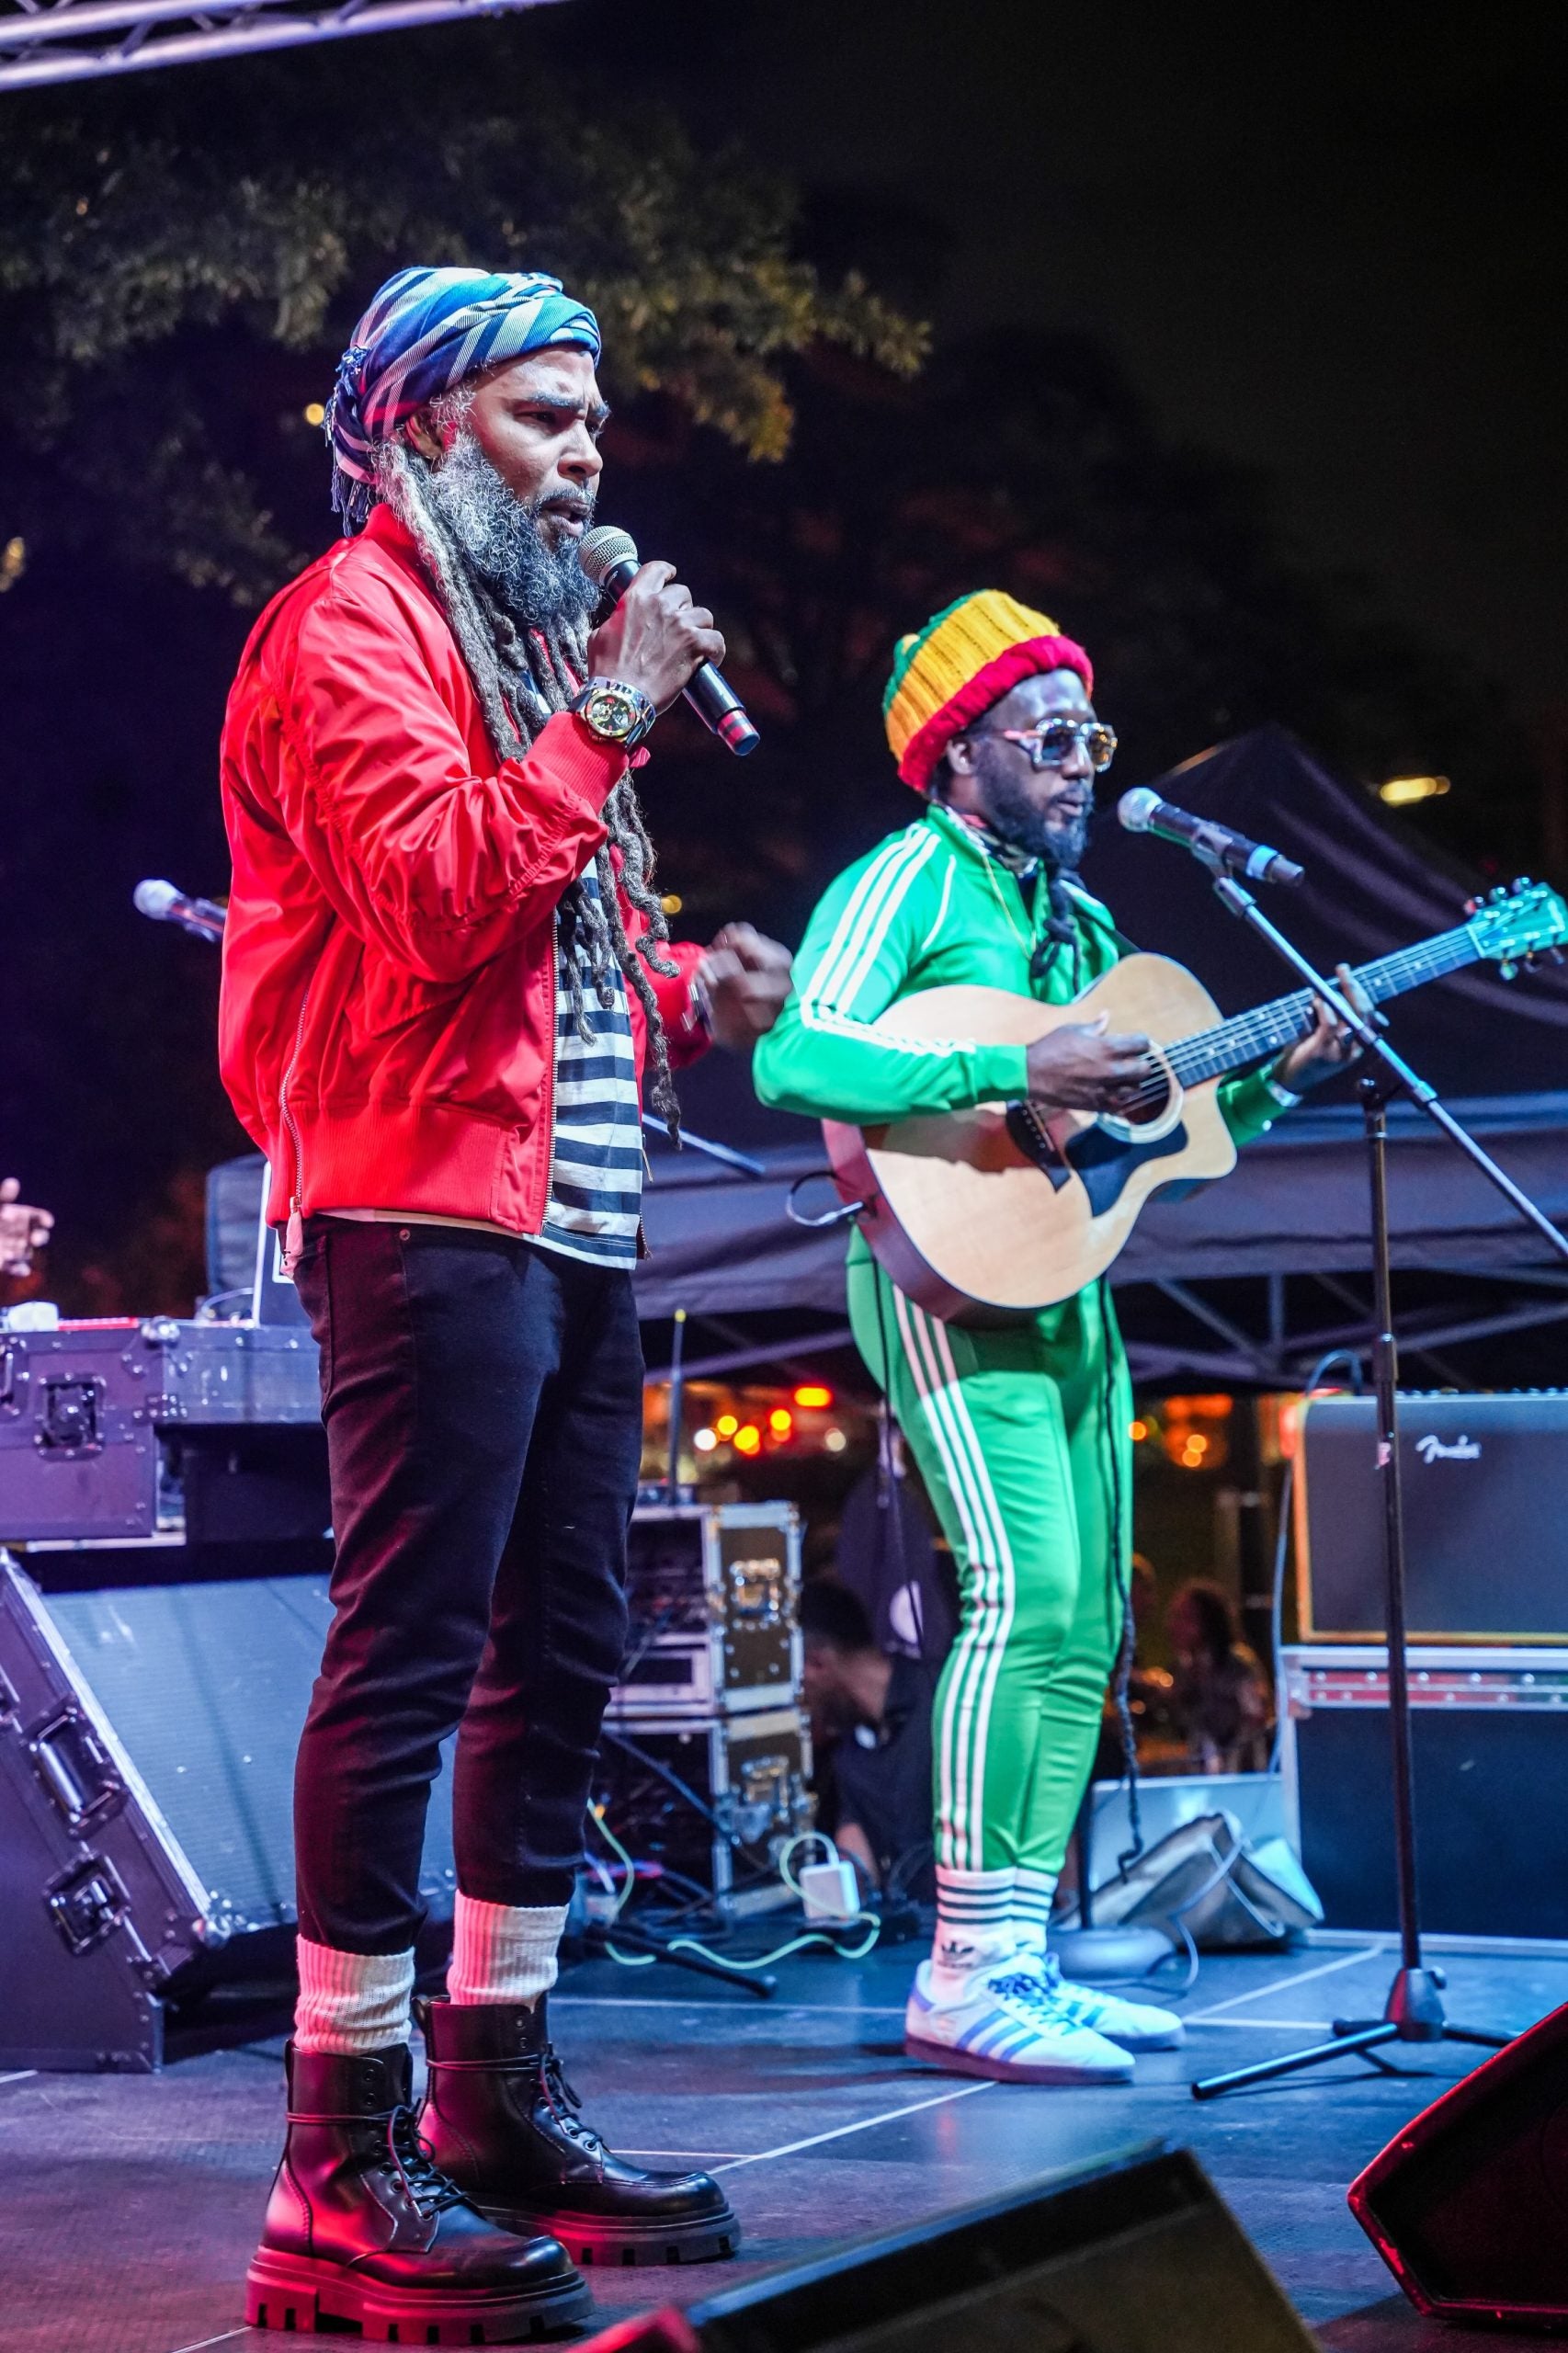 D.C’s “Diaspora Fest” Doesn’t Just Bring The Entire Caribbean Diaspora Into One Festival, It’s A Movement